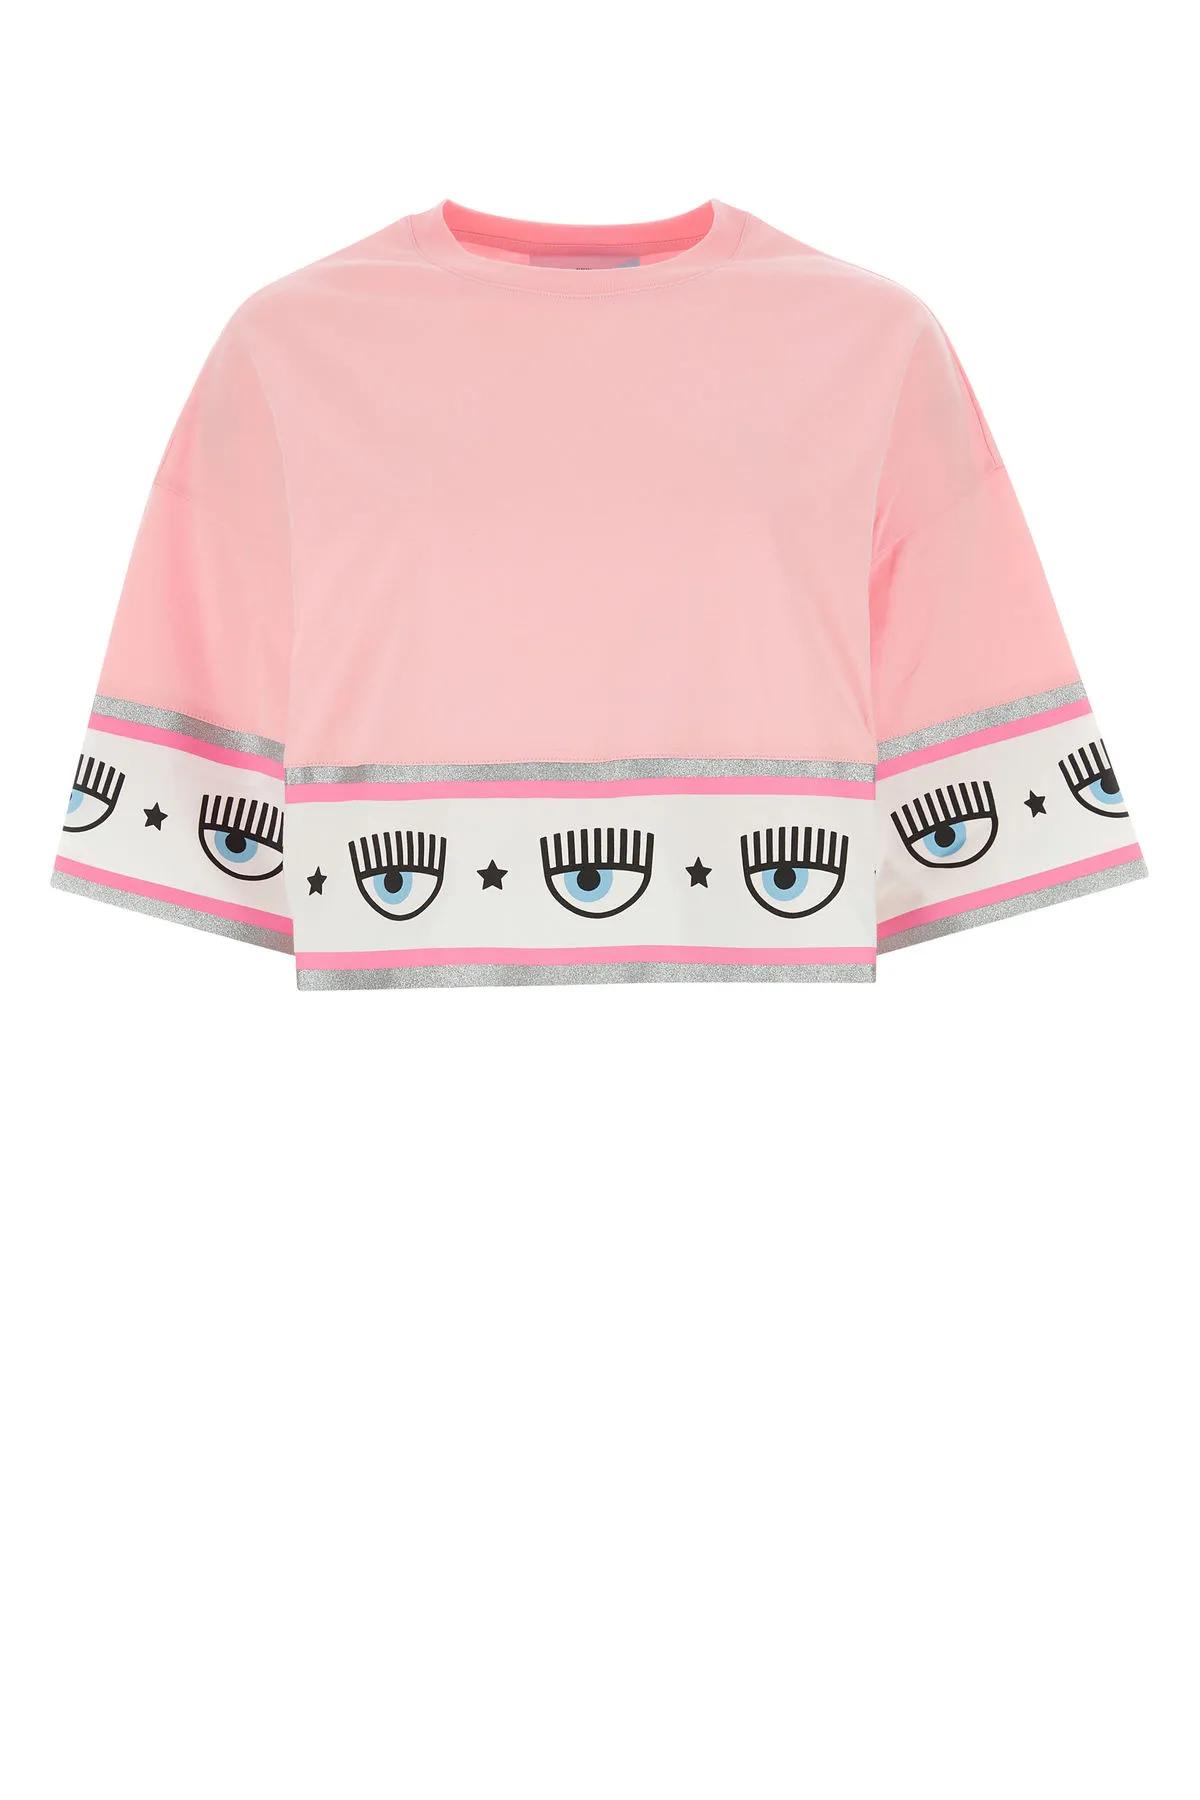 Chiara Ferragni Pink Cotton Oversize T-shirt